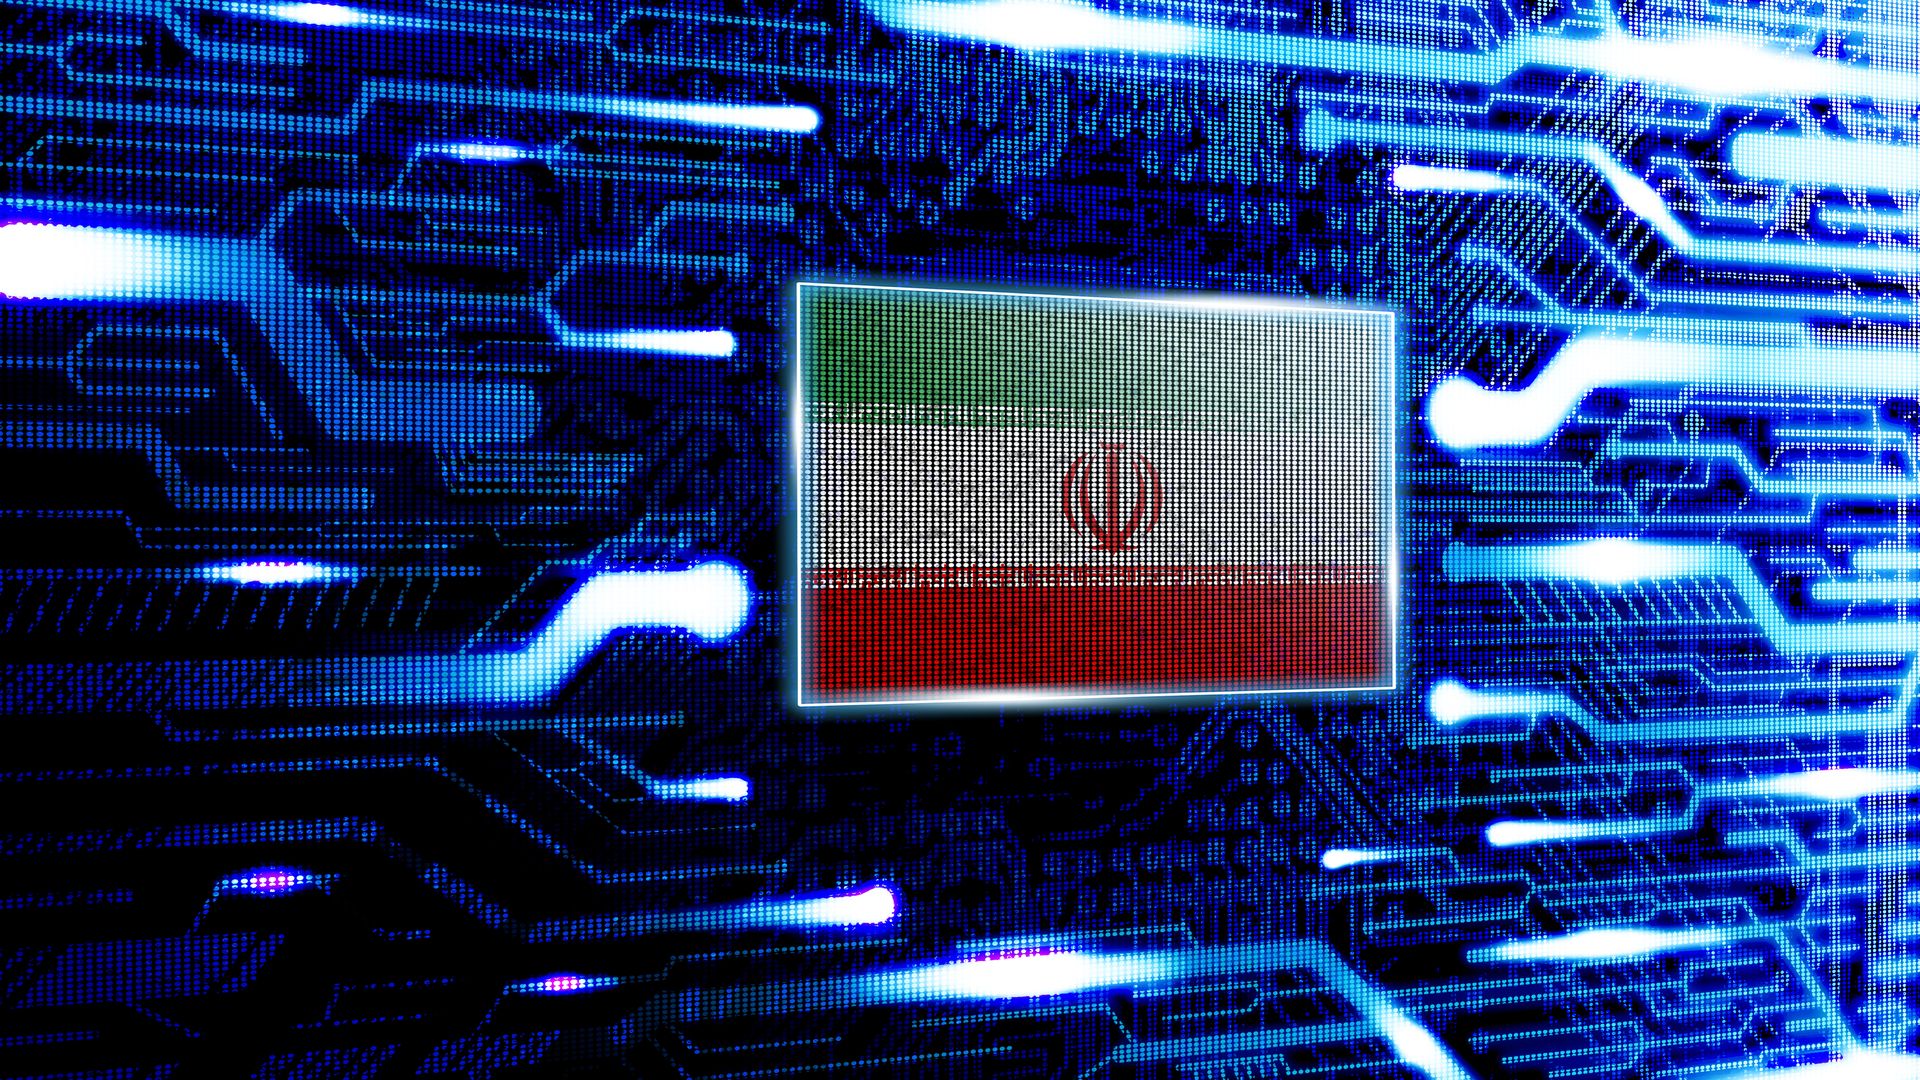 Iran cyber illustration